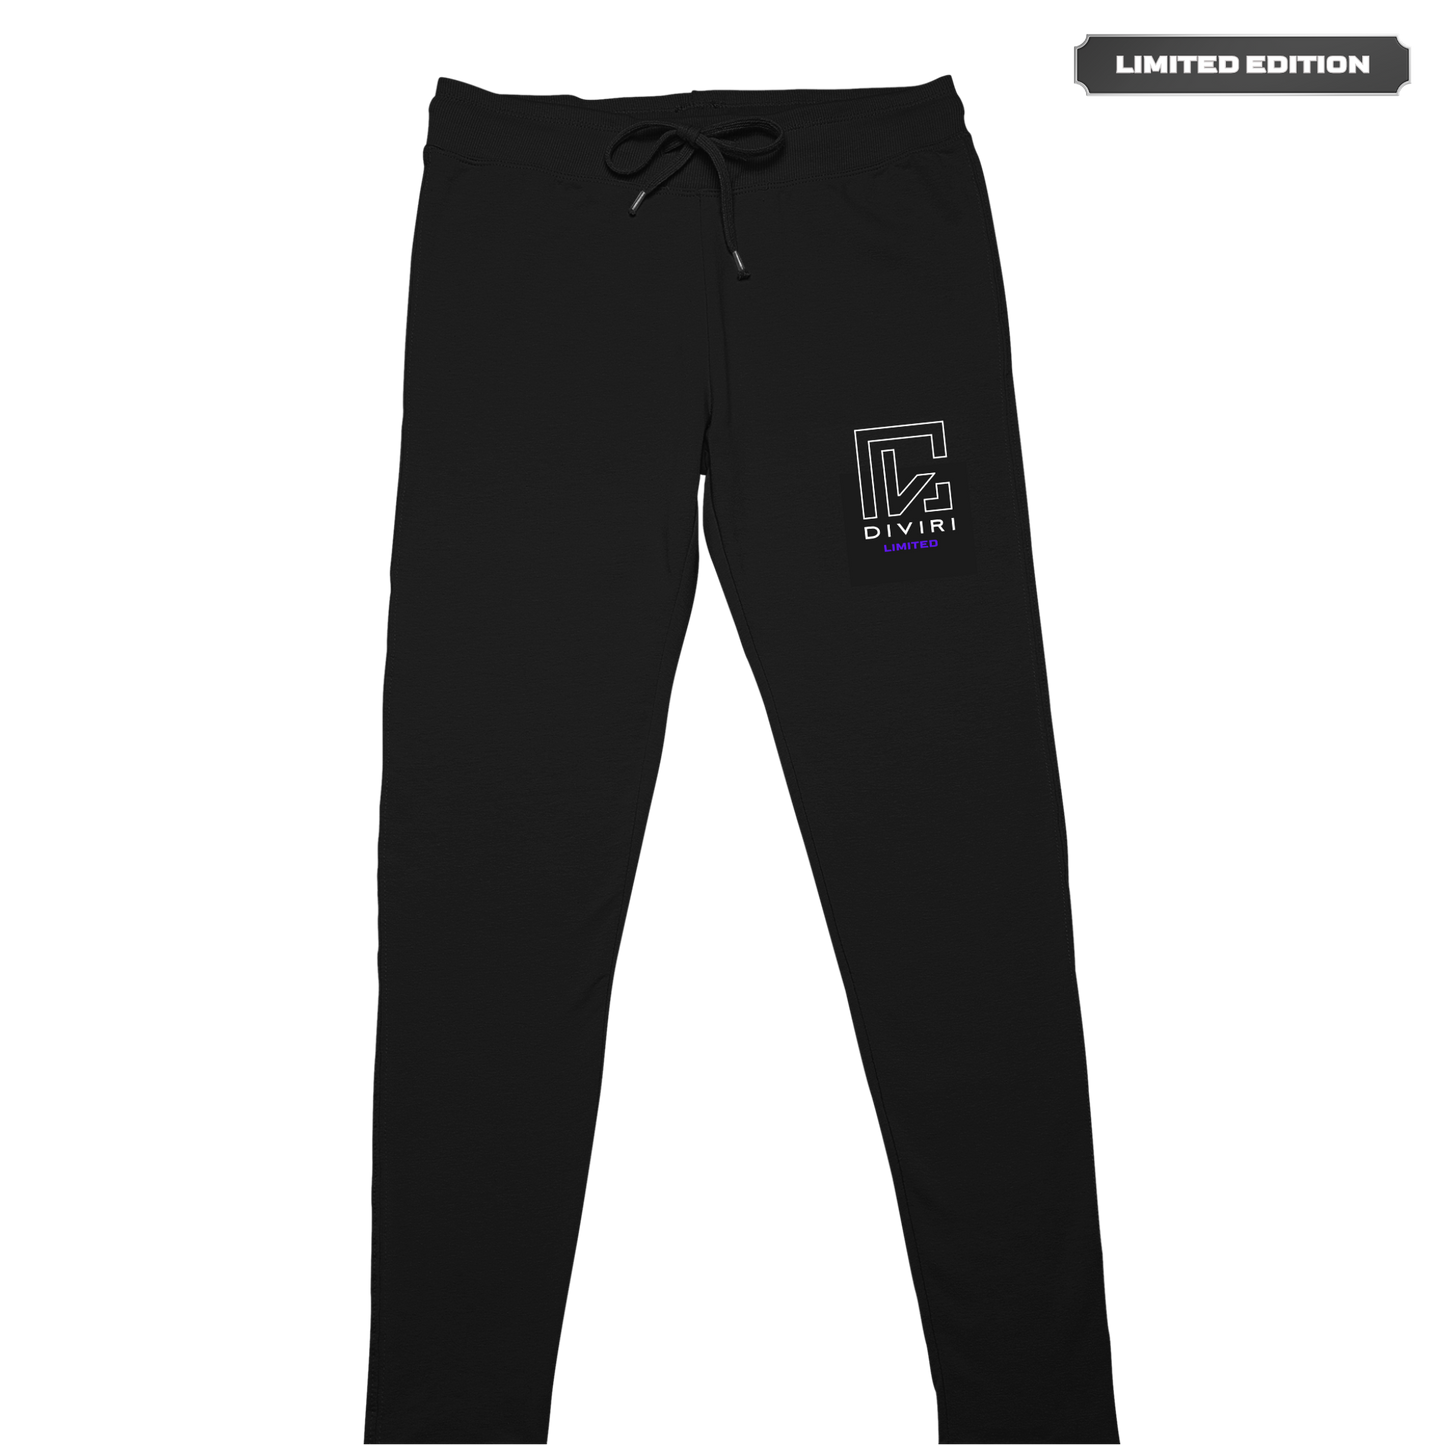 DIVIRI Premium Sweatpants (Limited Edition)